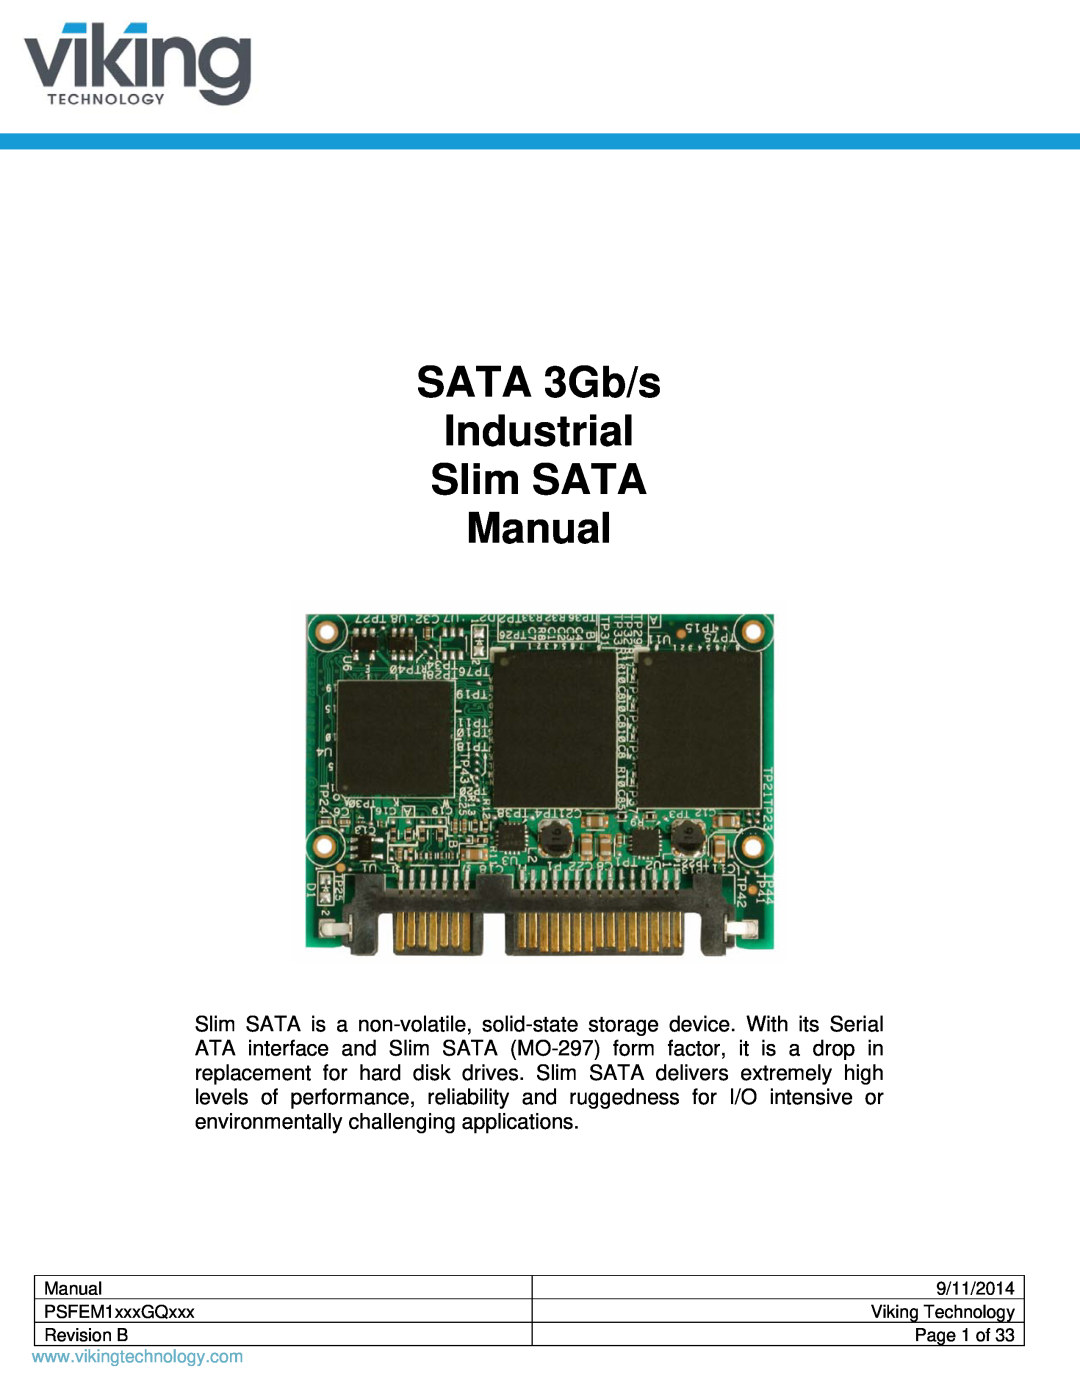 Viking manual SATA 3Gb/s Industrial Slim SATA Manual, Manual PSFEM1xxxGQxxx, 9/11/2014 Viking Technology 